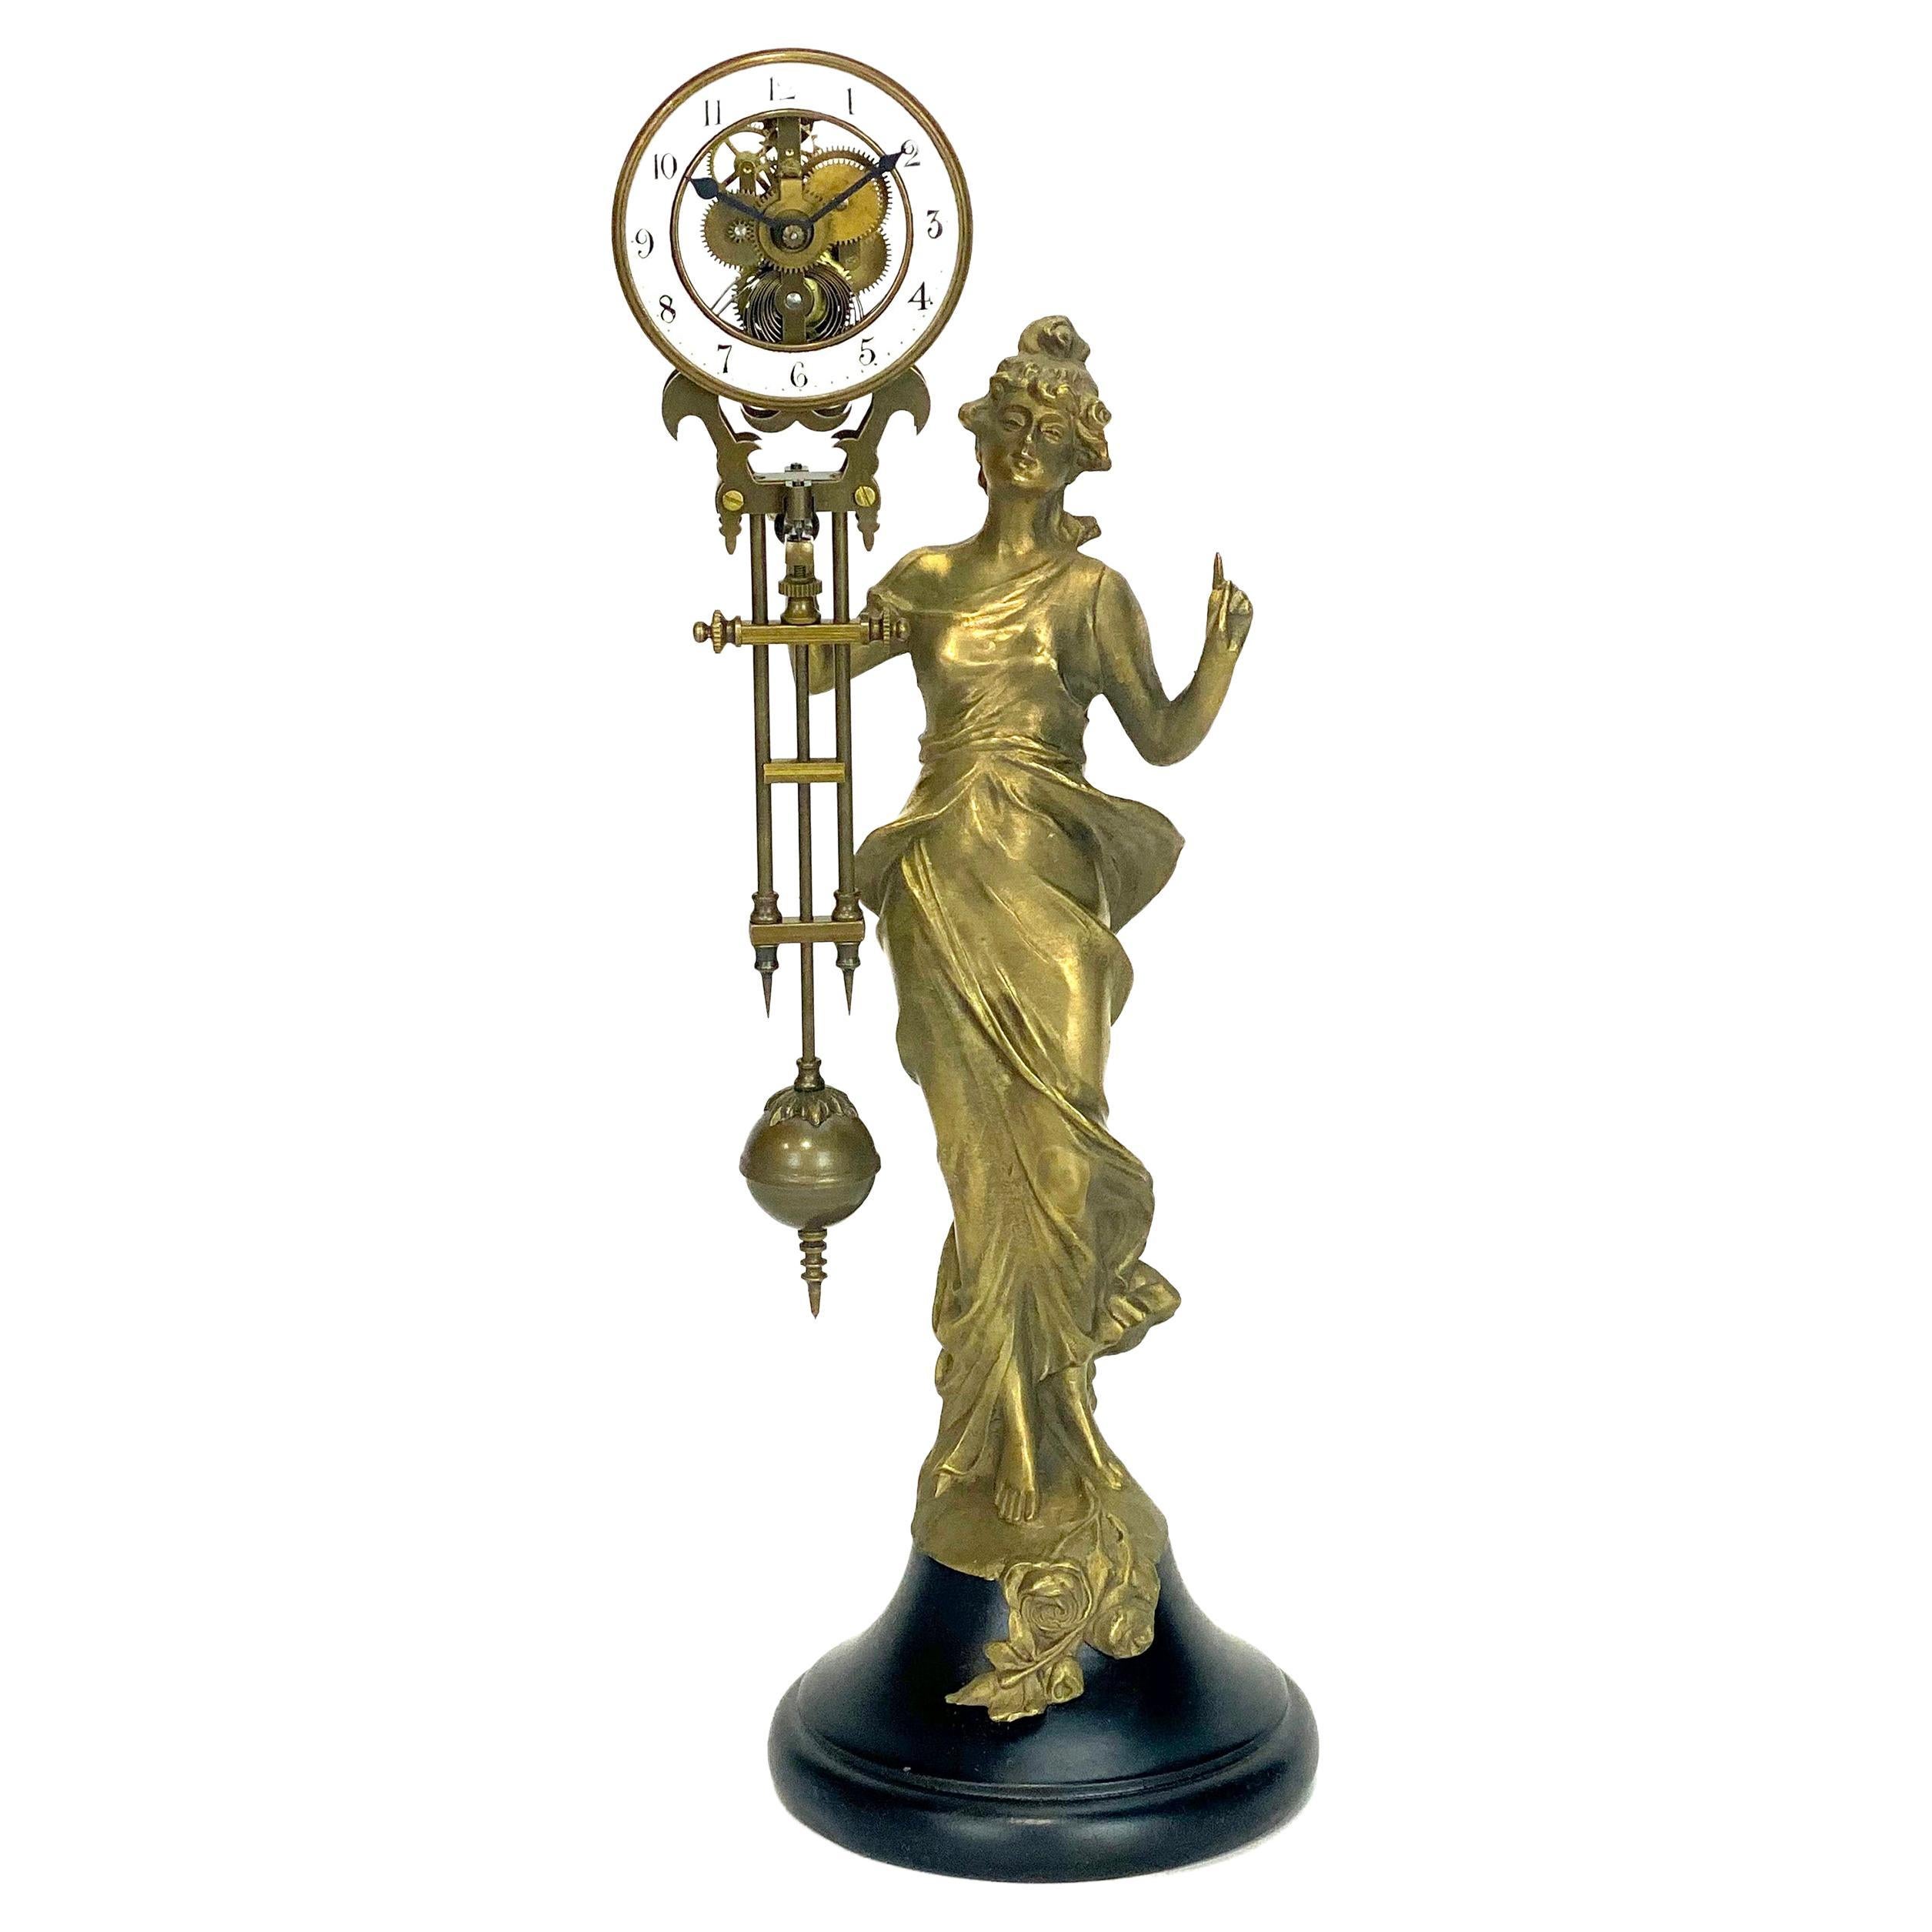 Mystery-Messing Diana-Figur, drehbare Uhr mit 8 Tag- Skelett-Uhr